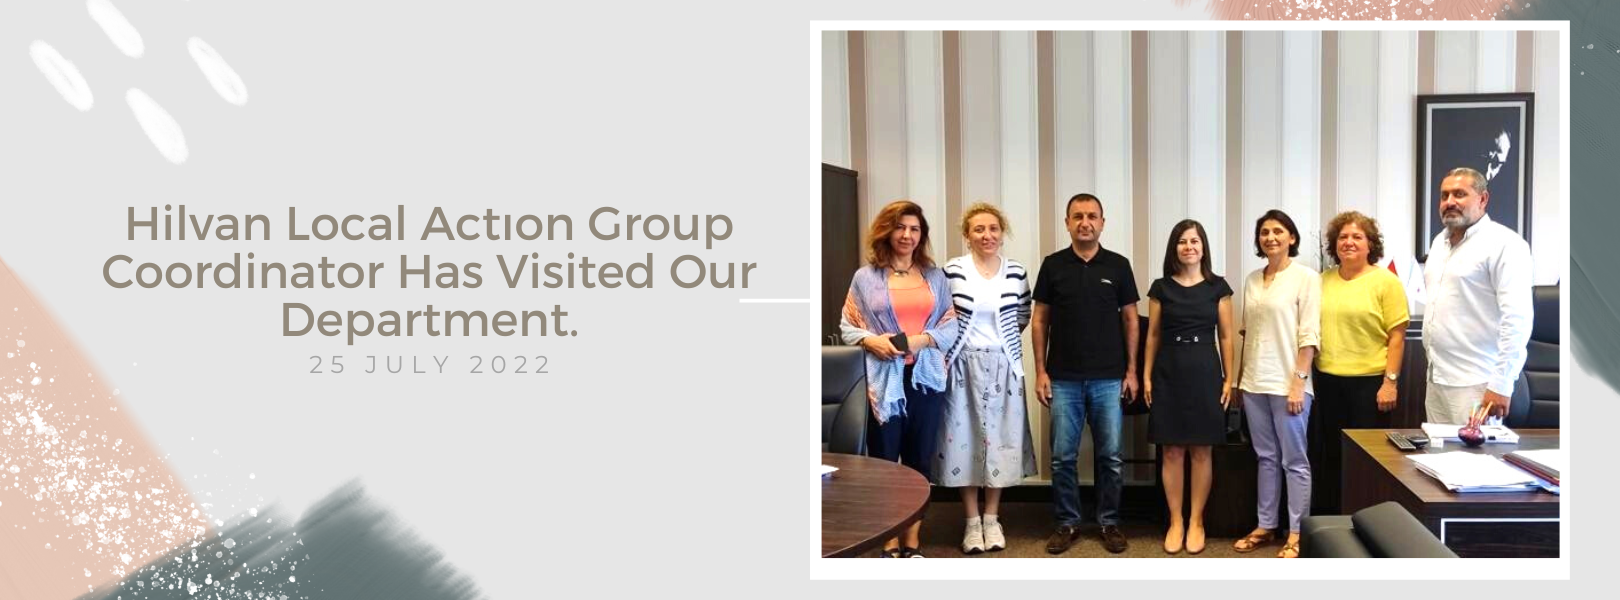 Hilvan Local Actıon Group Coordinator Has Visited Our Department.